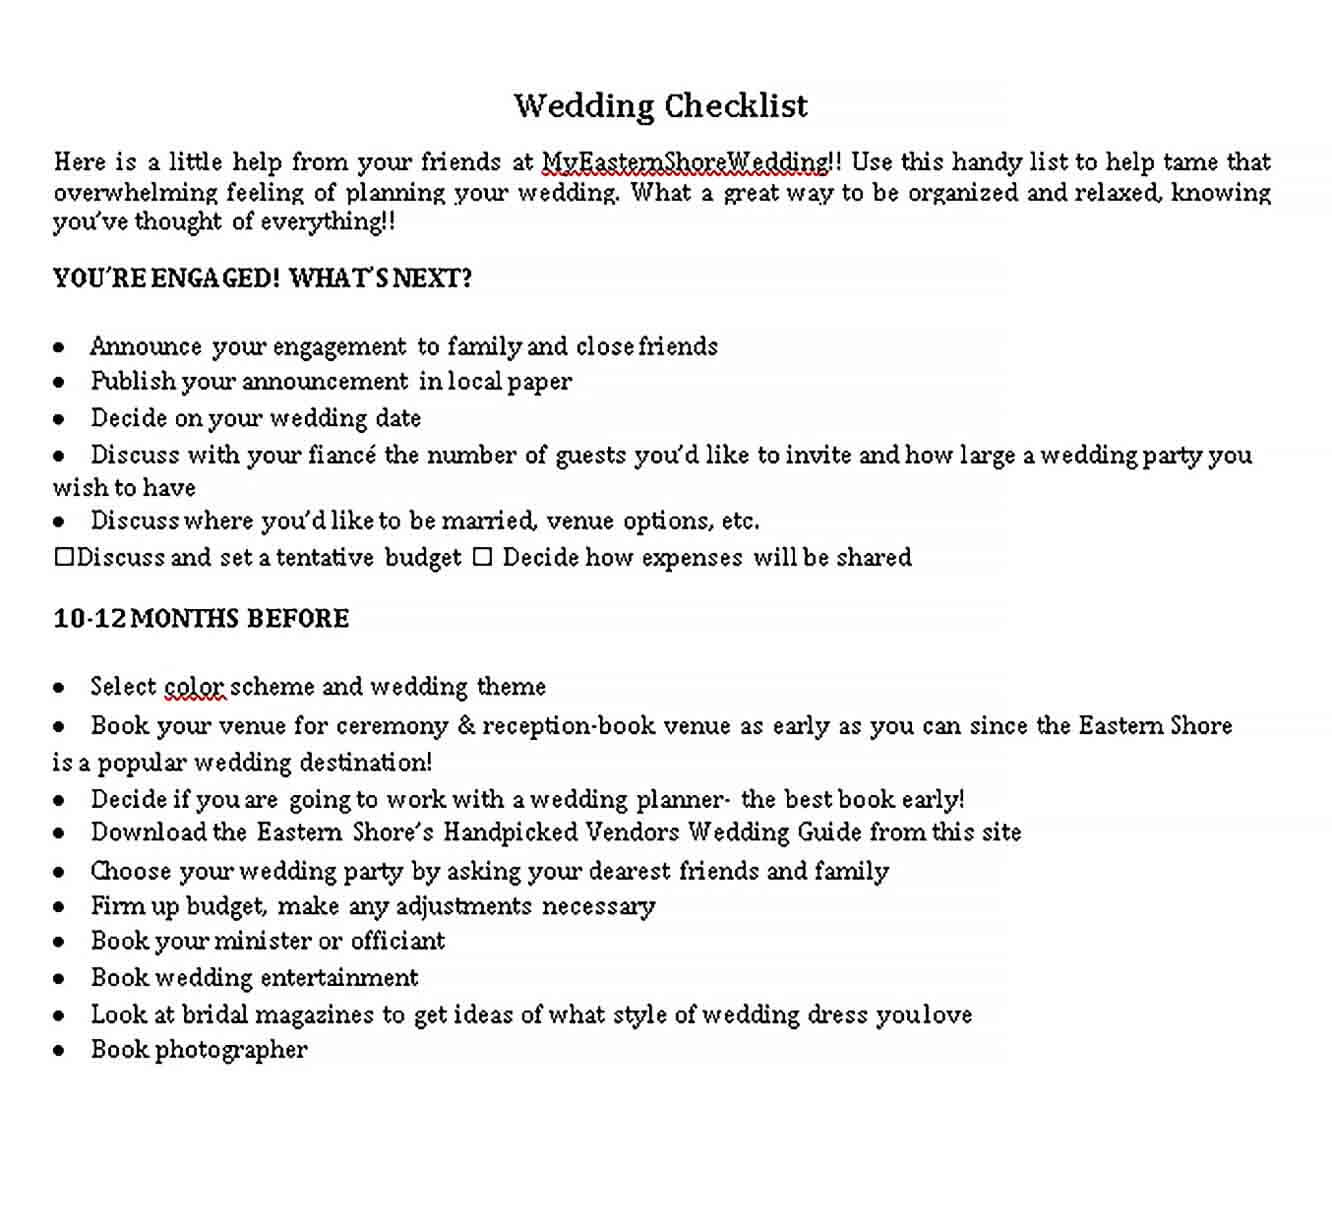 Sample Printable Wedding Checklist